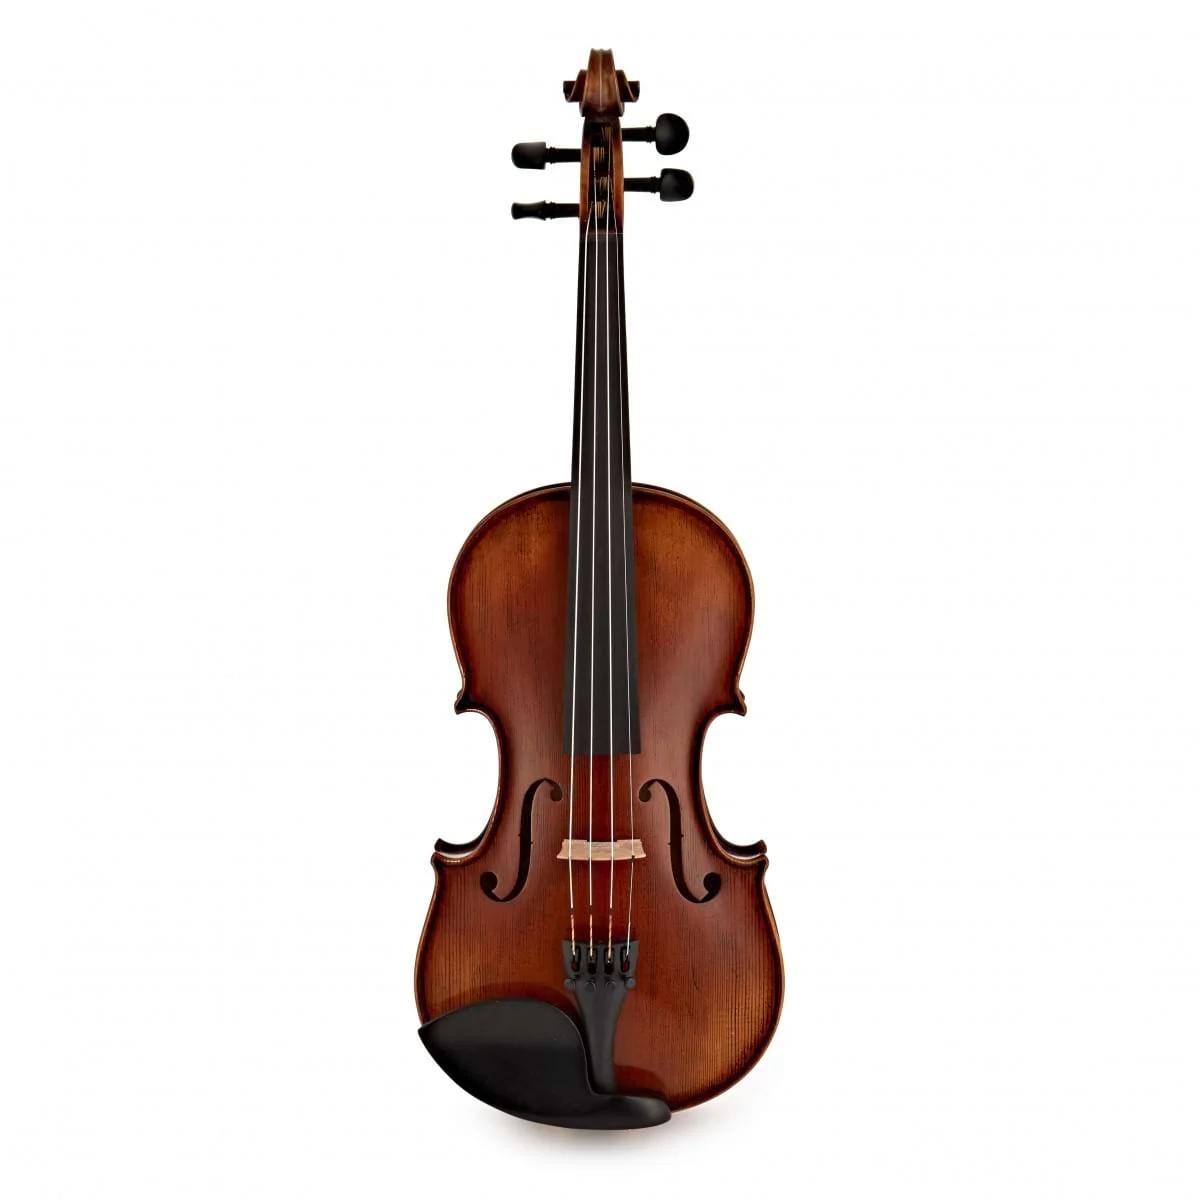 best violin brands for intermediate players - What is a good intermediate violin brand